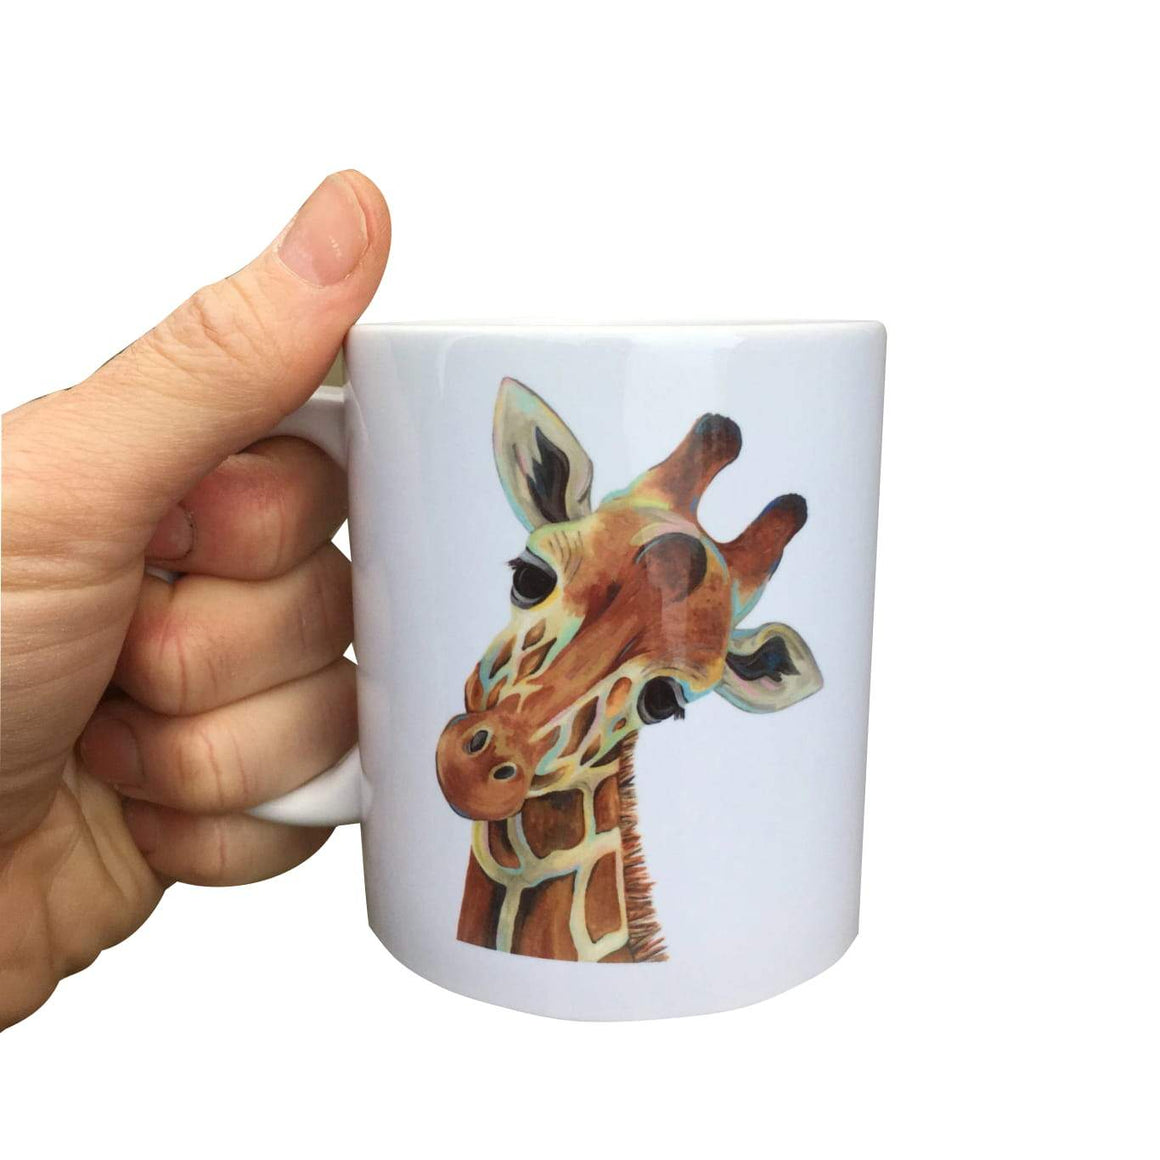 Painted Giraffe Mug (Can be personalised)